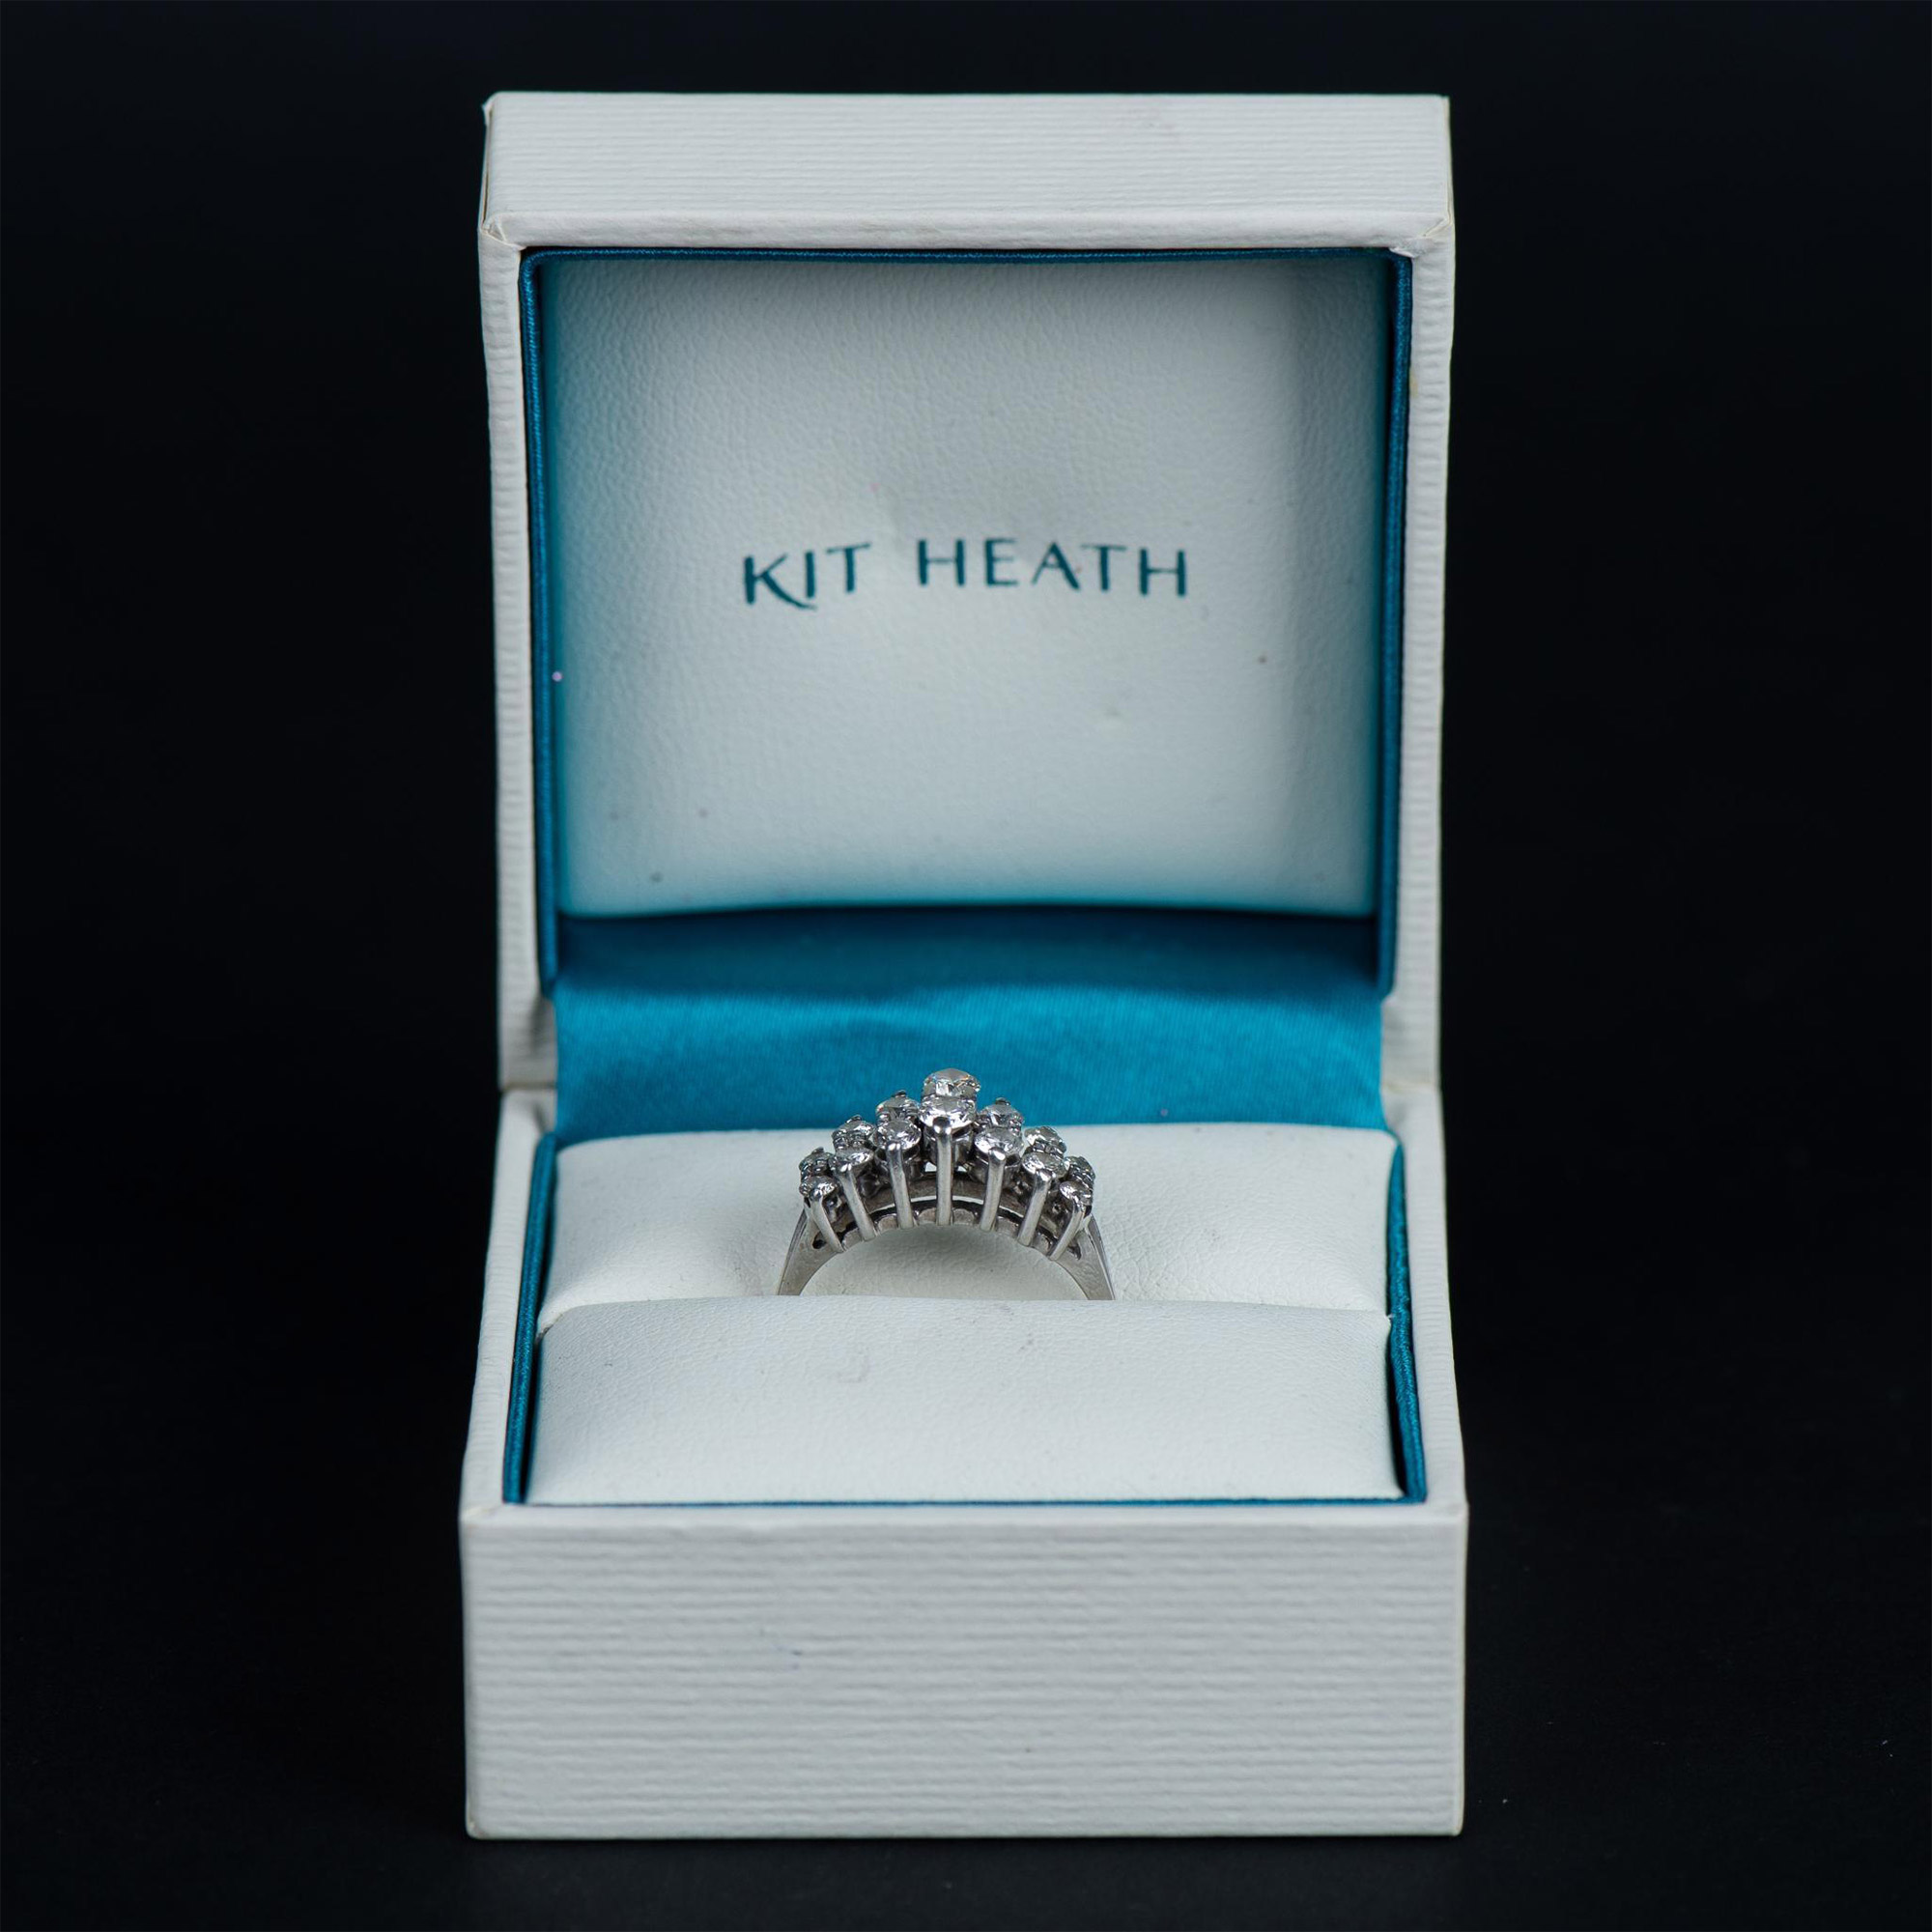 Stunning 14K White Gold and Graduated Diamond Ring - Image 4 of 4